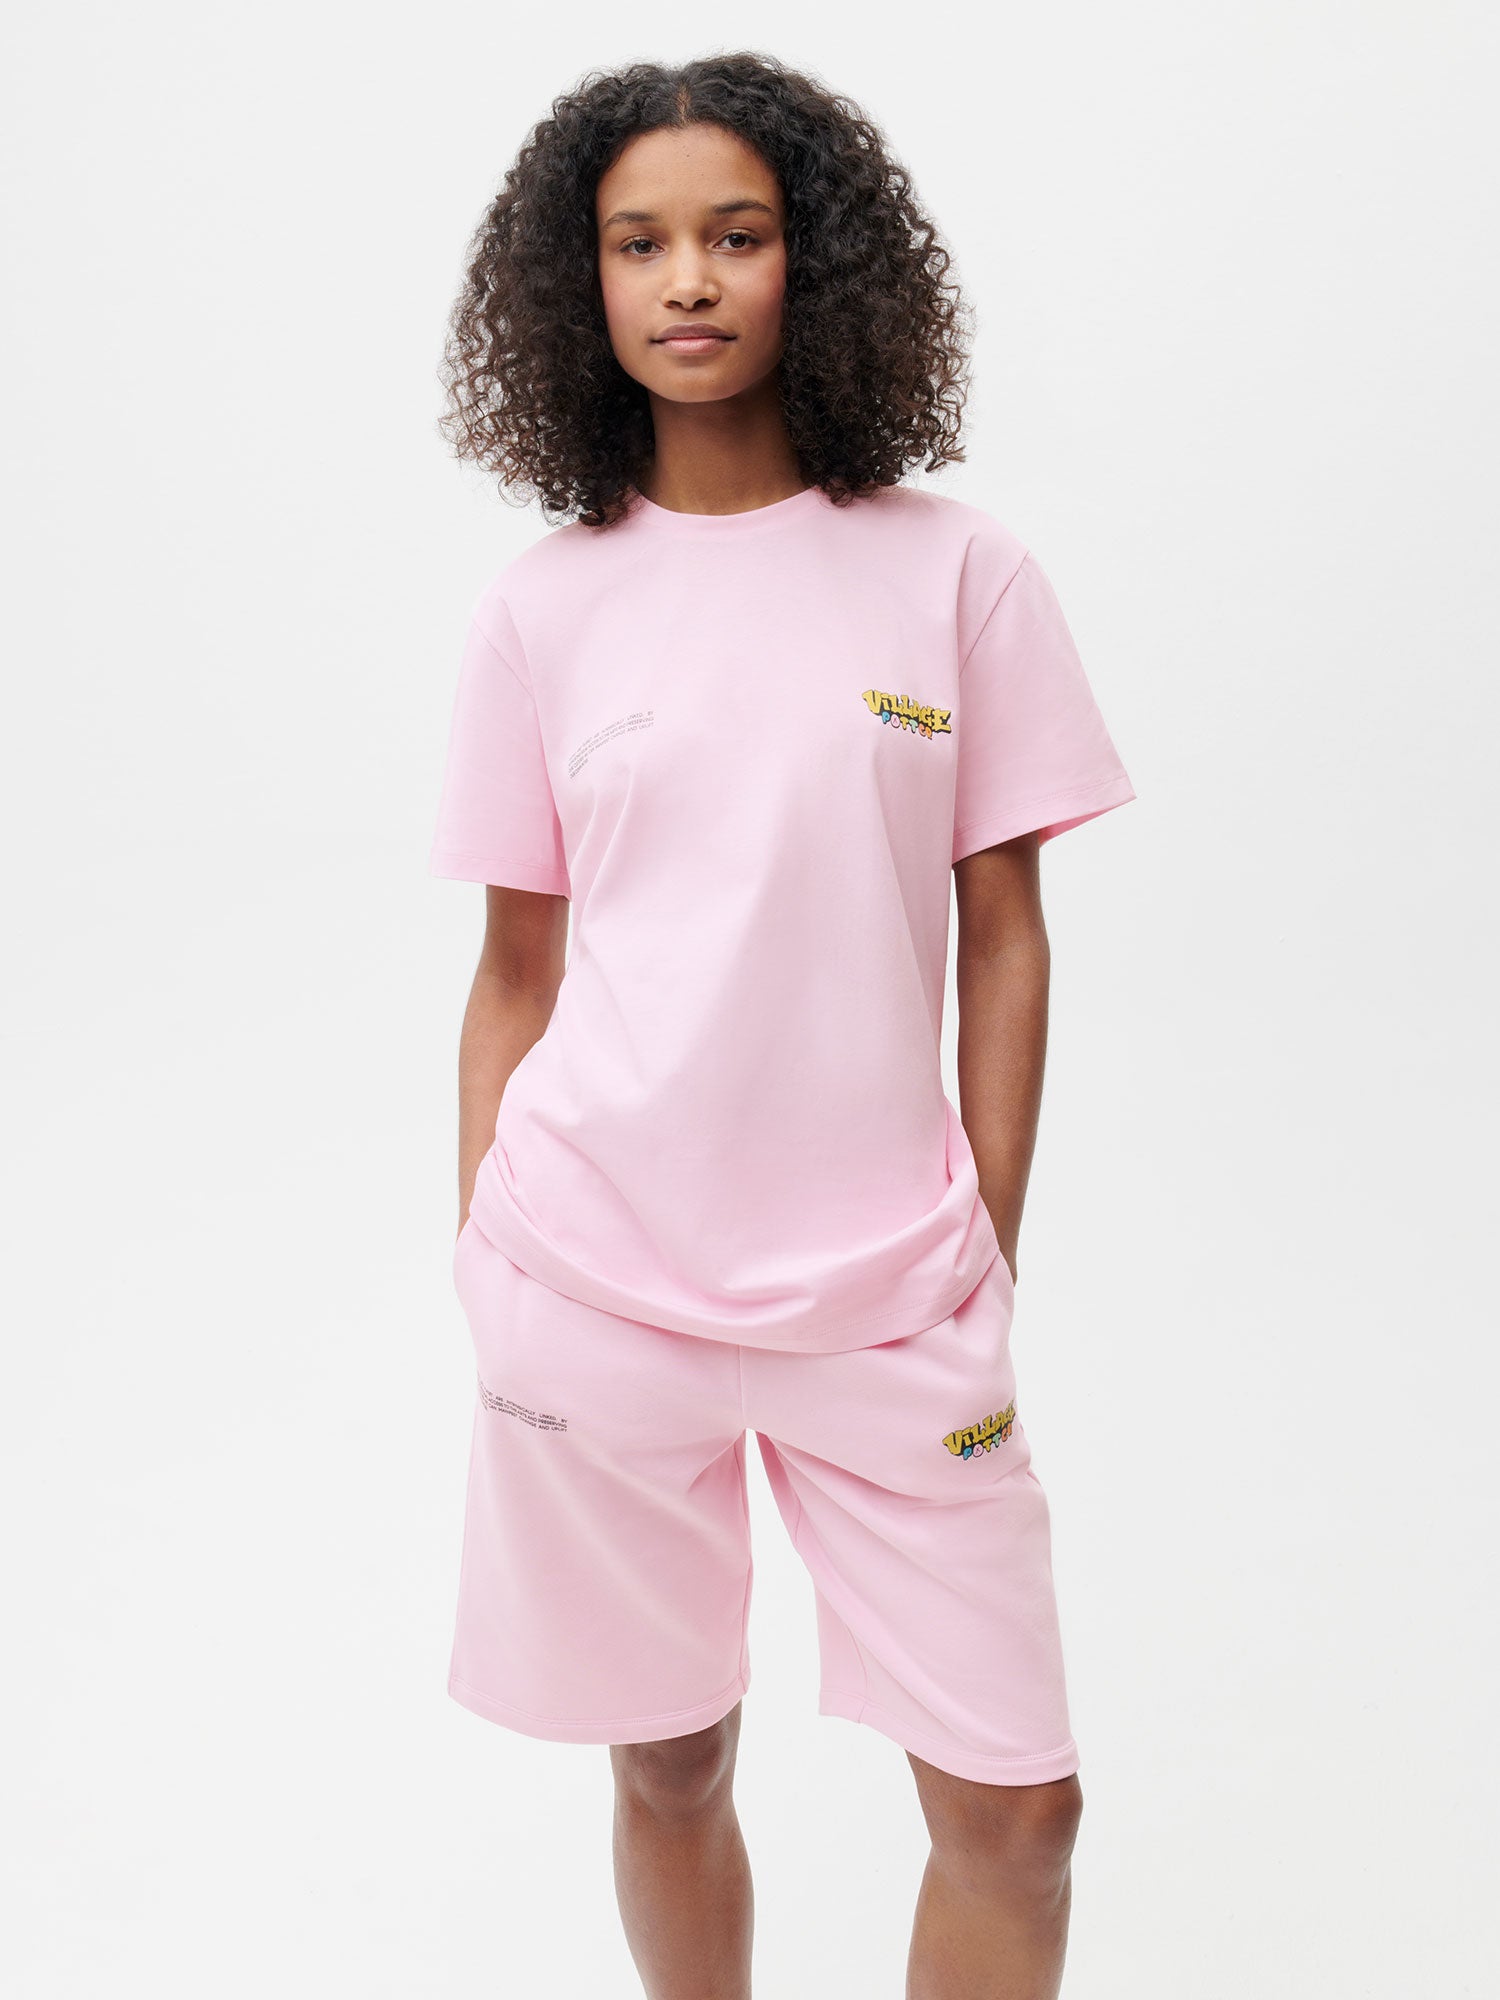 Pangaia-Roberto-Lugo-T-Shirt-Dominos-Graphic-Funghi-Pink-Female-1